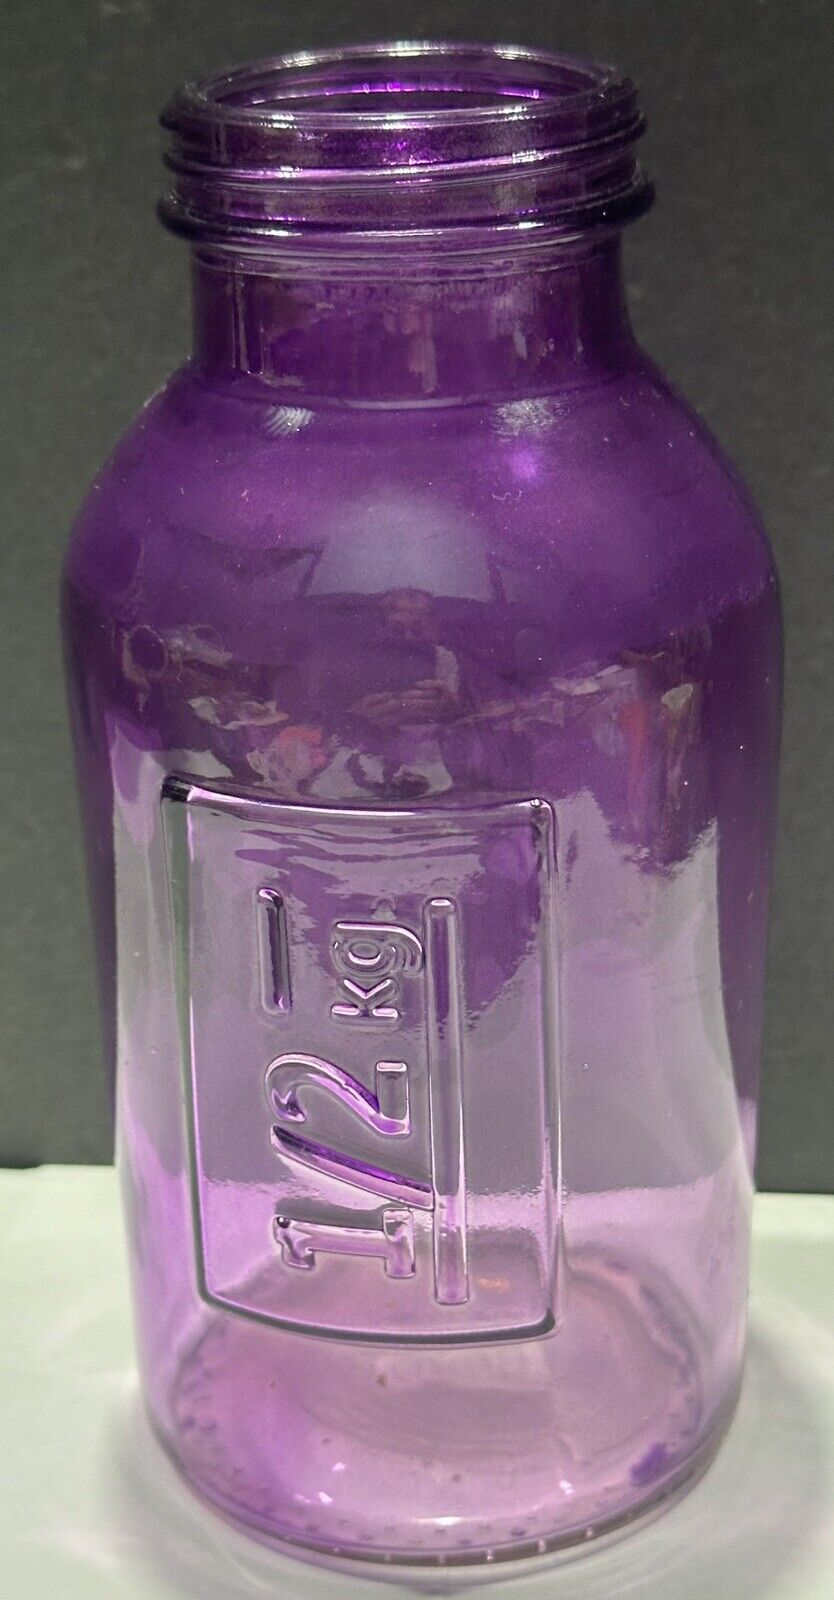 1/2 kg Purple Colored Glass Jar Decorative Medicinal Apothecary Bottle - Vintage